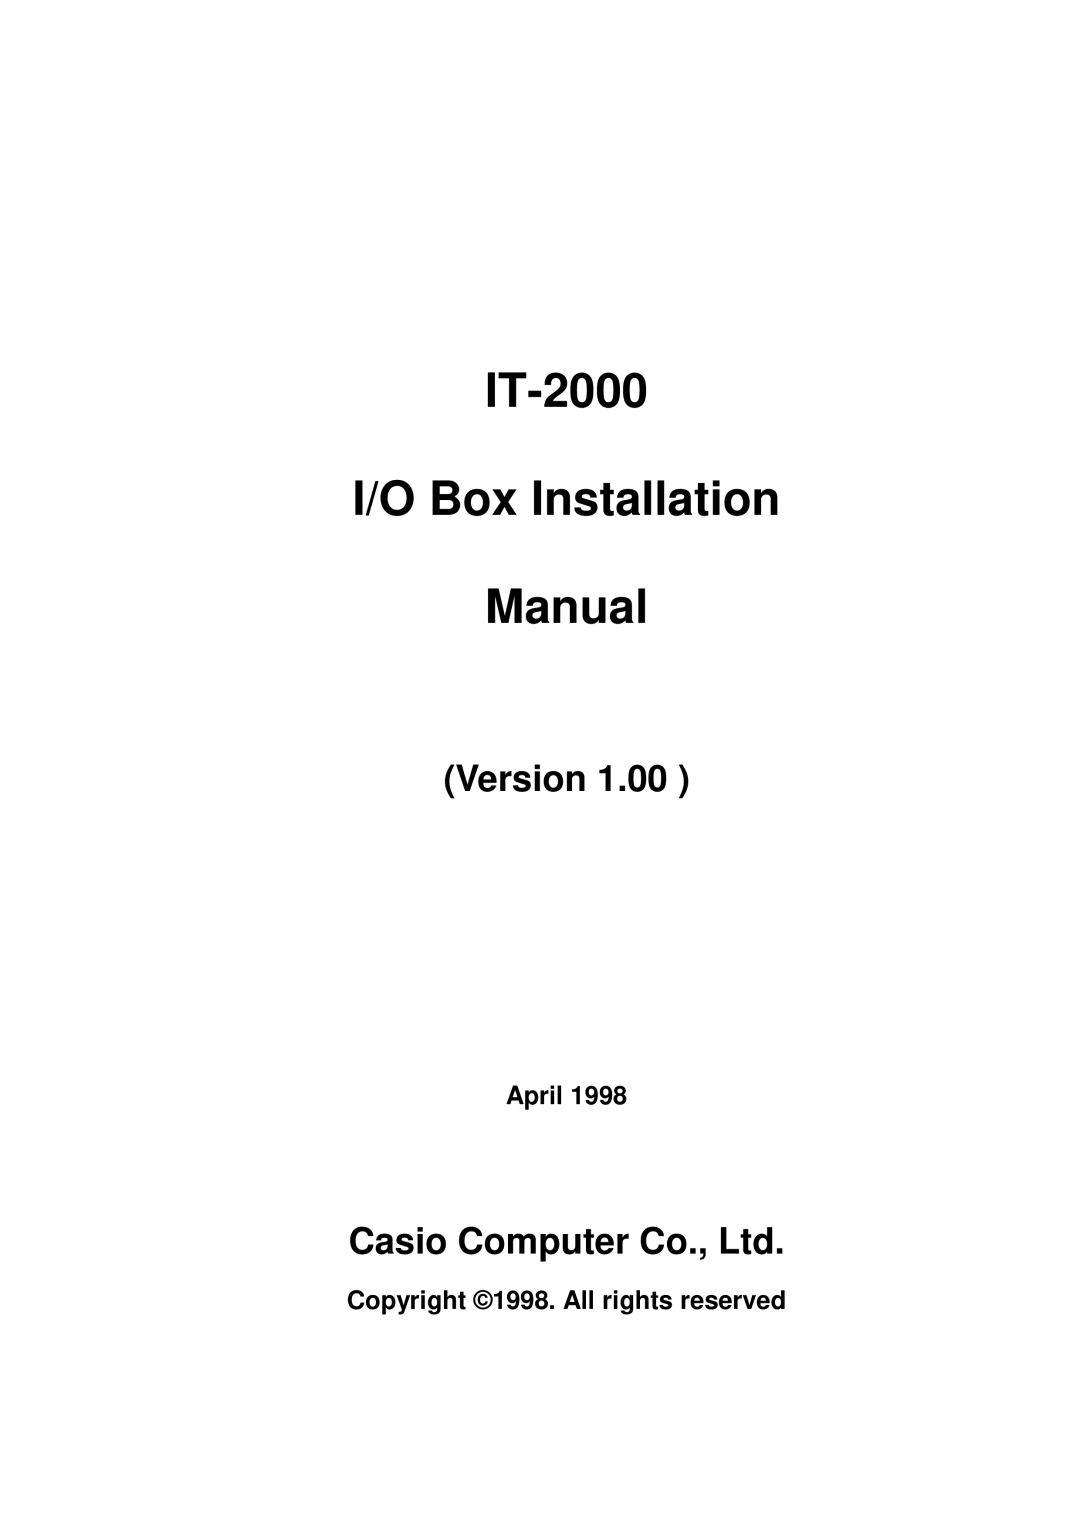 Casio installation manual April, Copyright 1998. All rights reserved, IT-2000 I/O Box Installation Manual, Version 